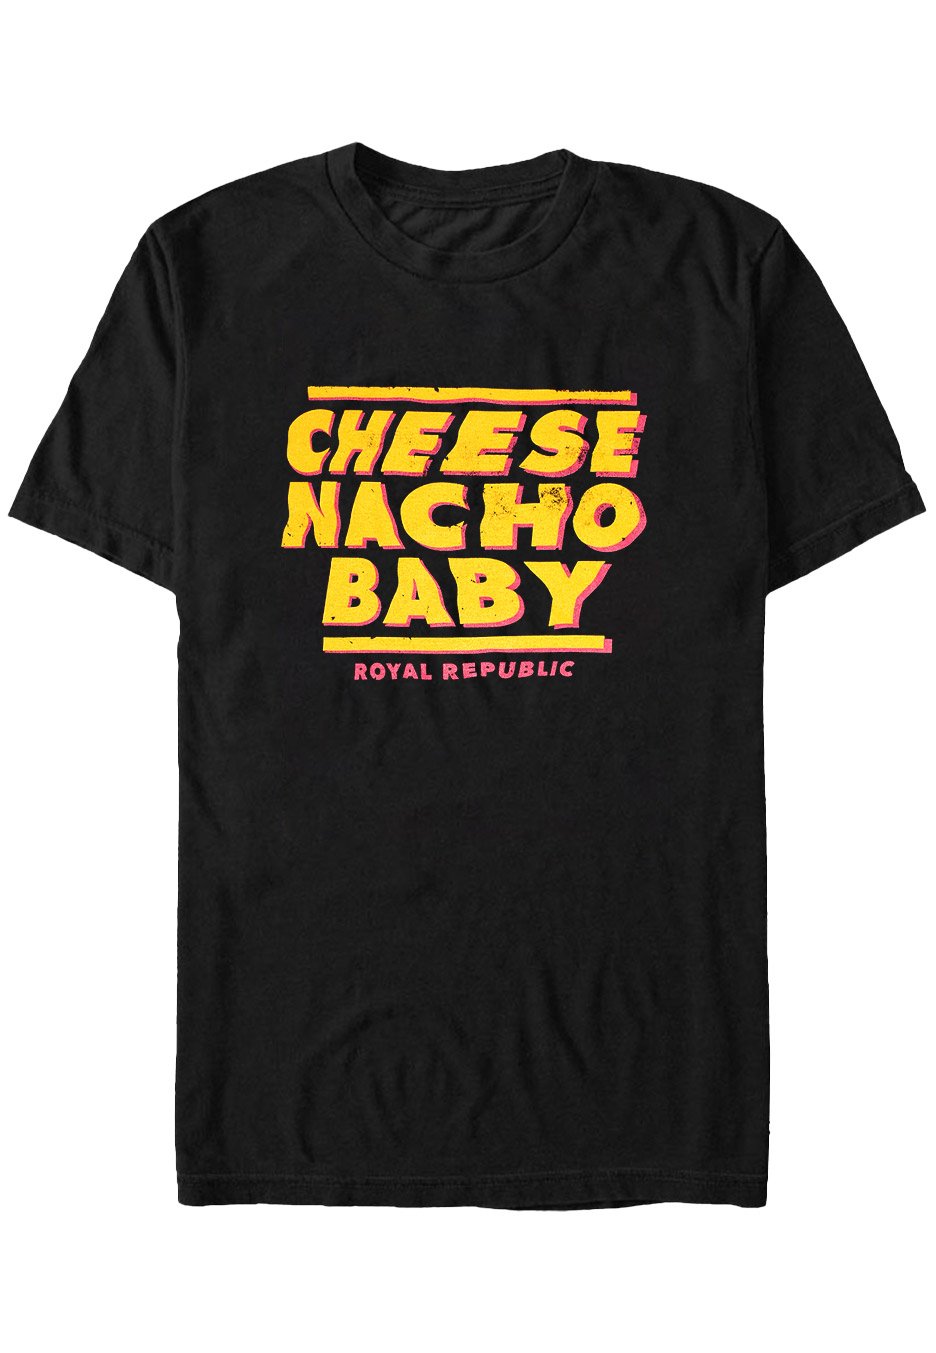 Royal Republic - Cheese Nacho Baby - T-Shirt